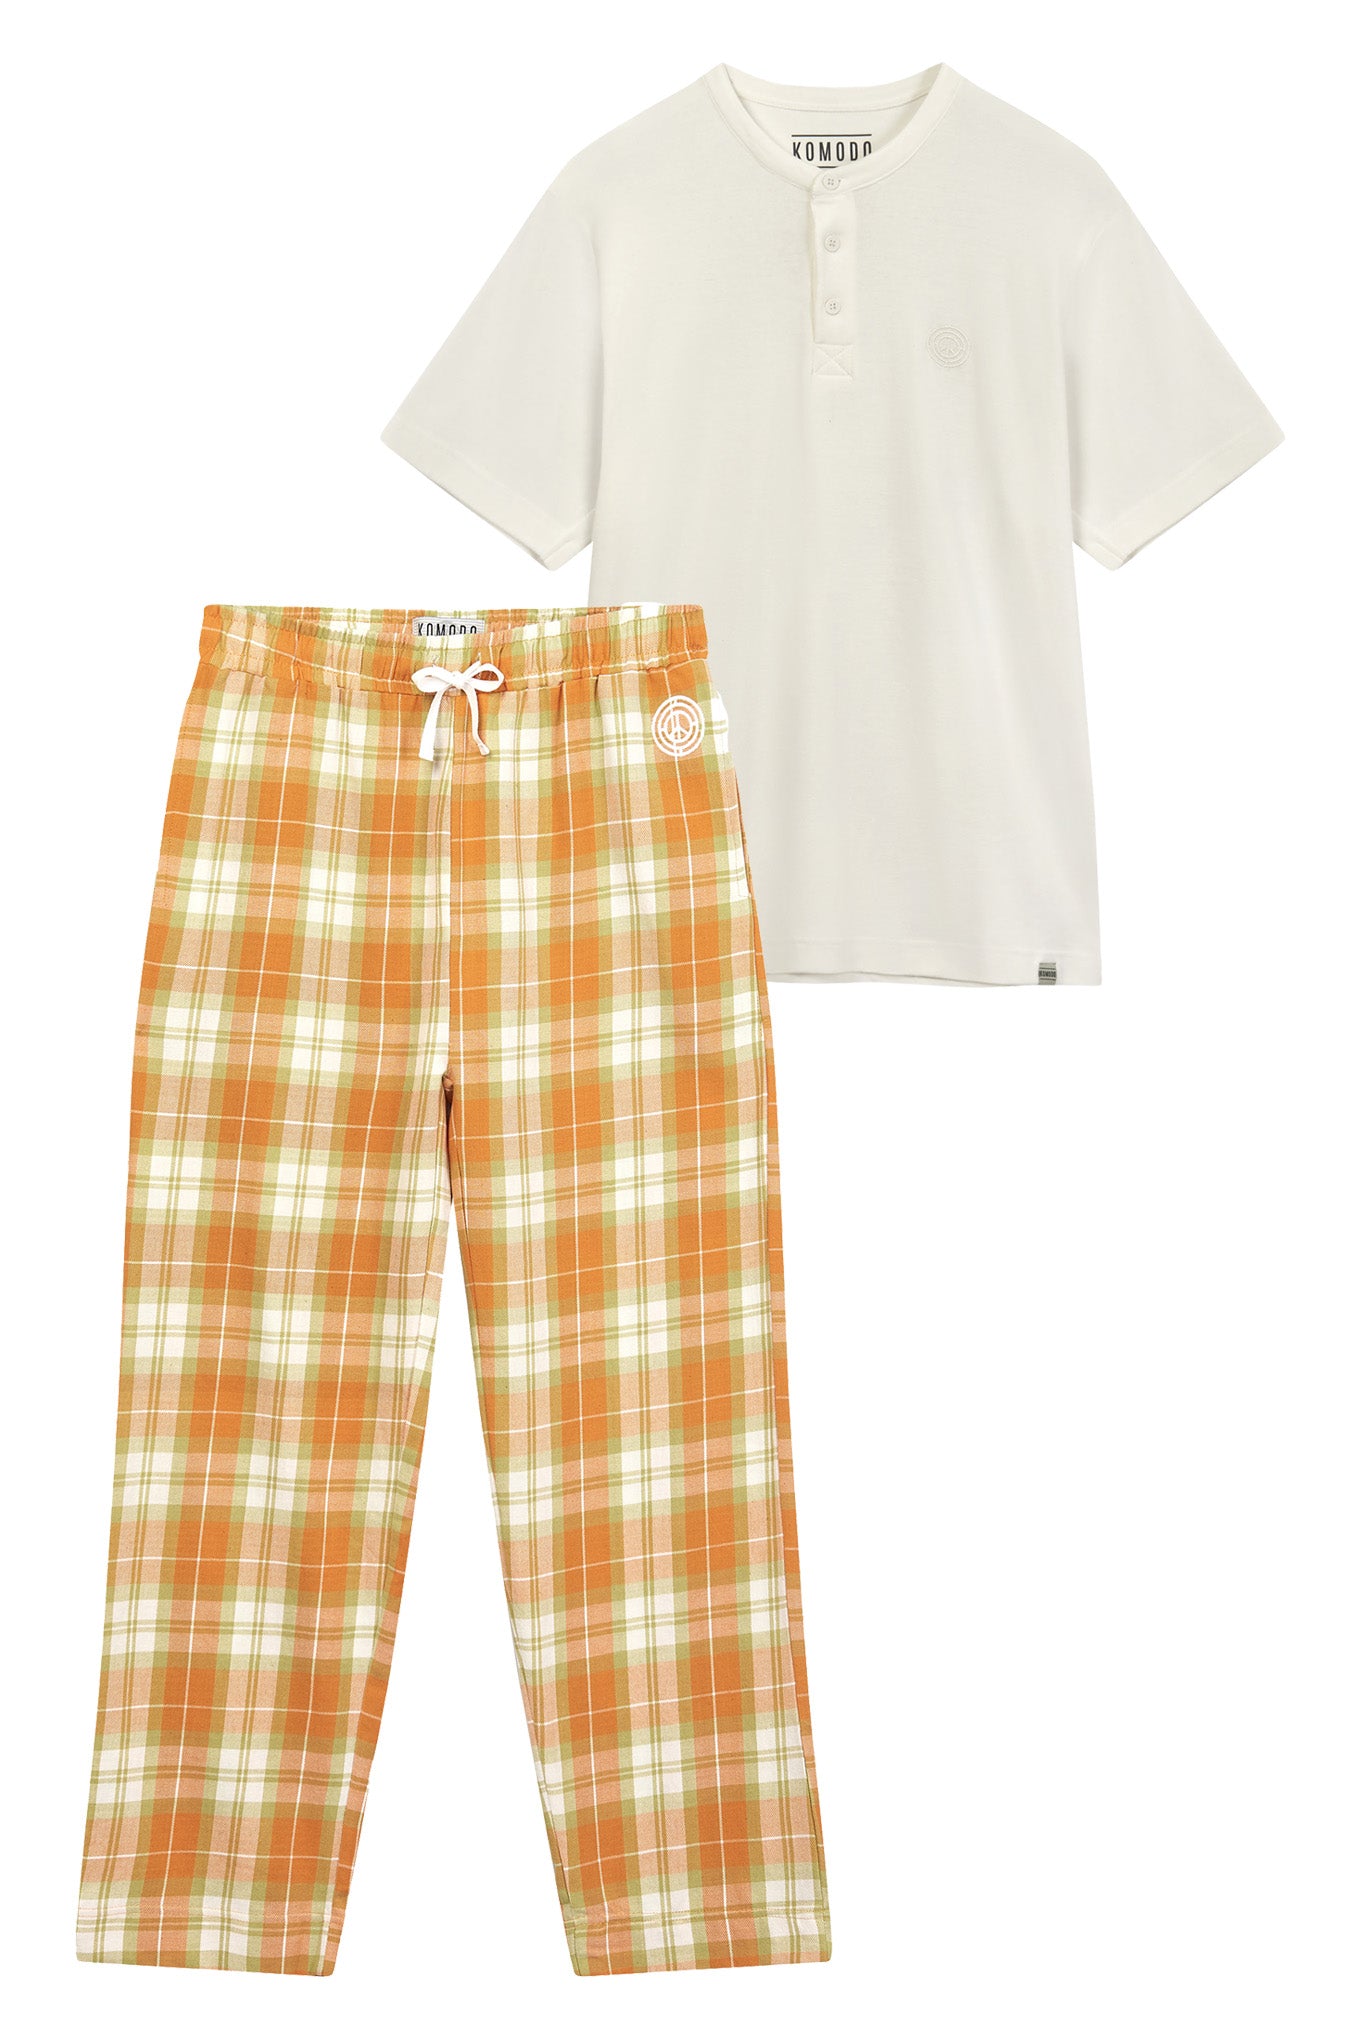 JIM JAM - Men's Organic Cotton Pyjama Set Orange